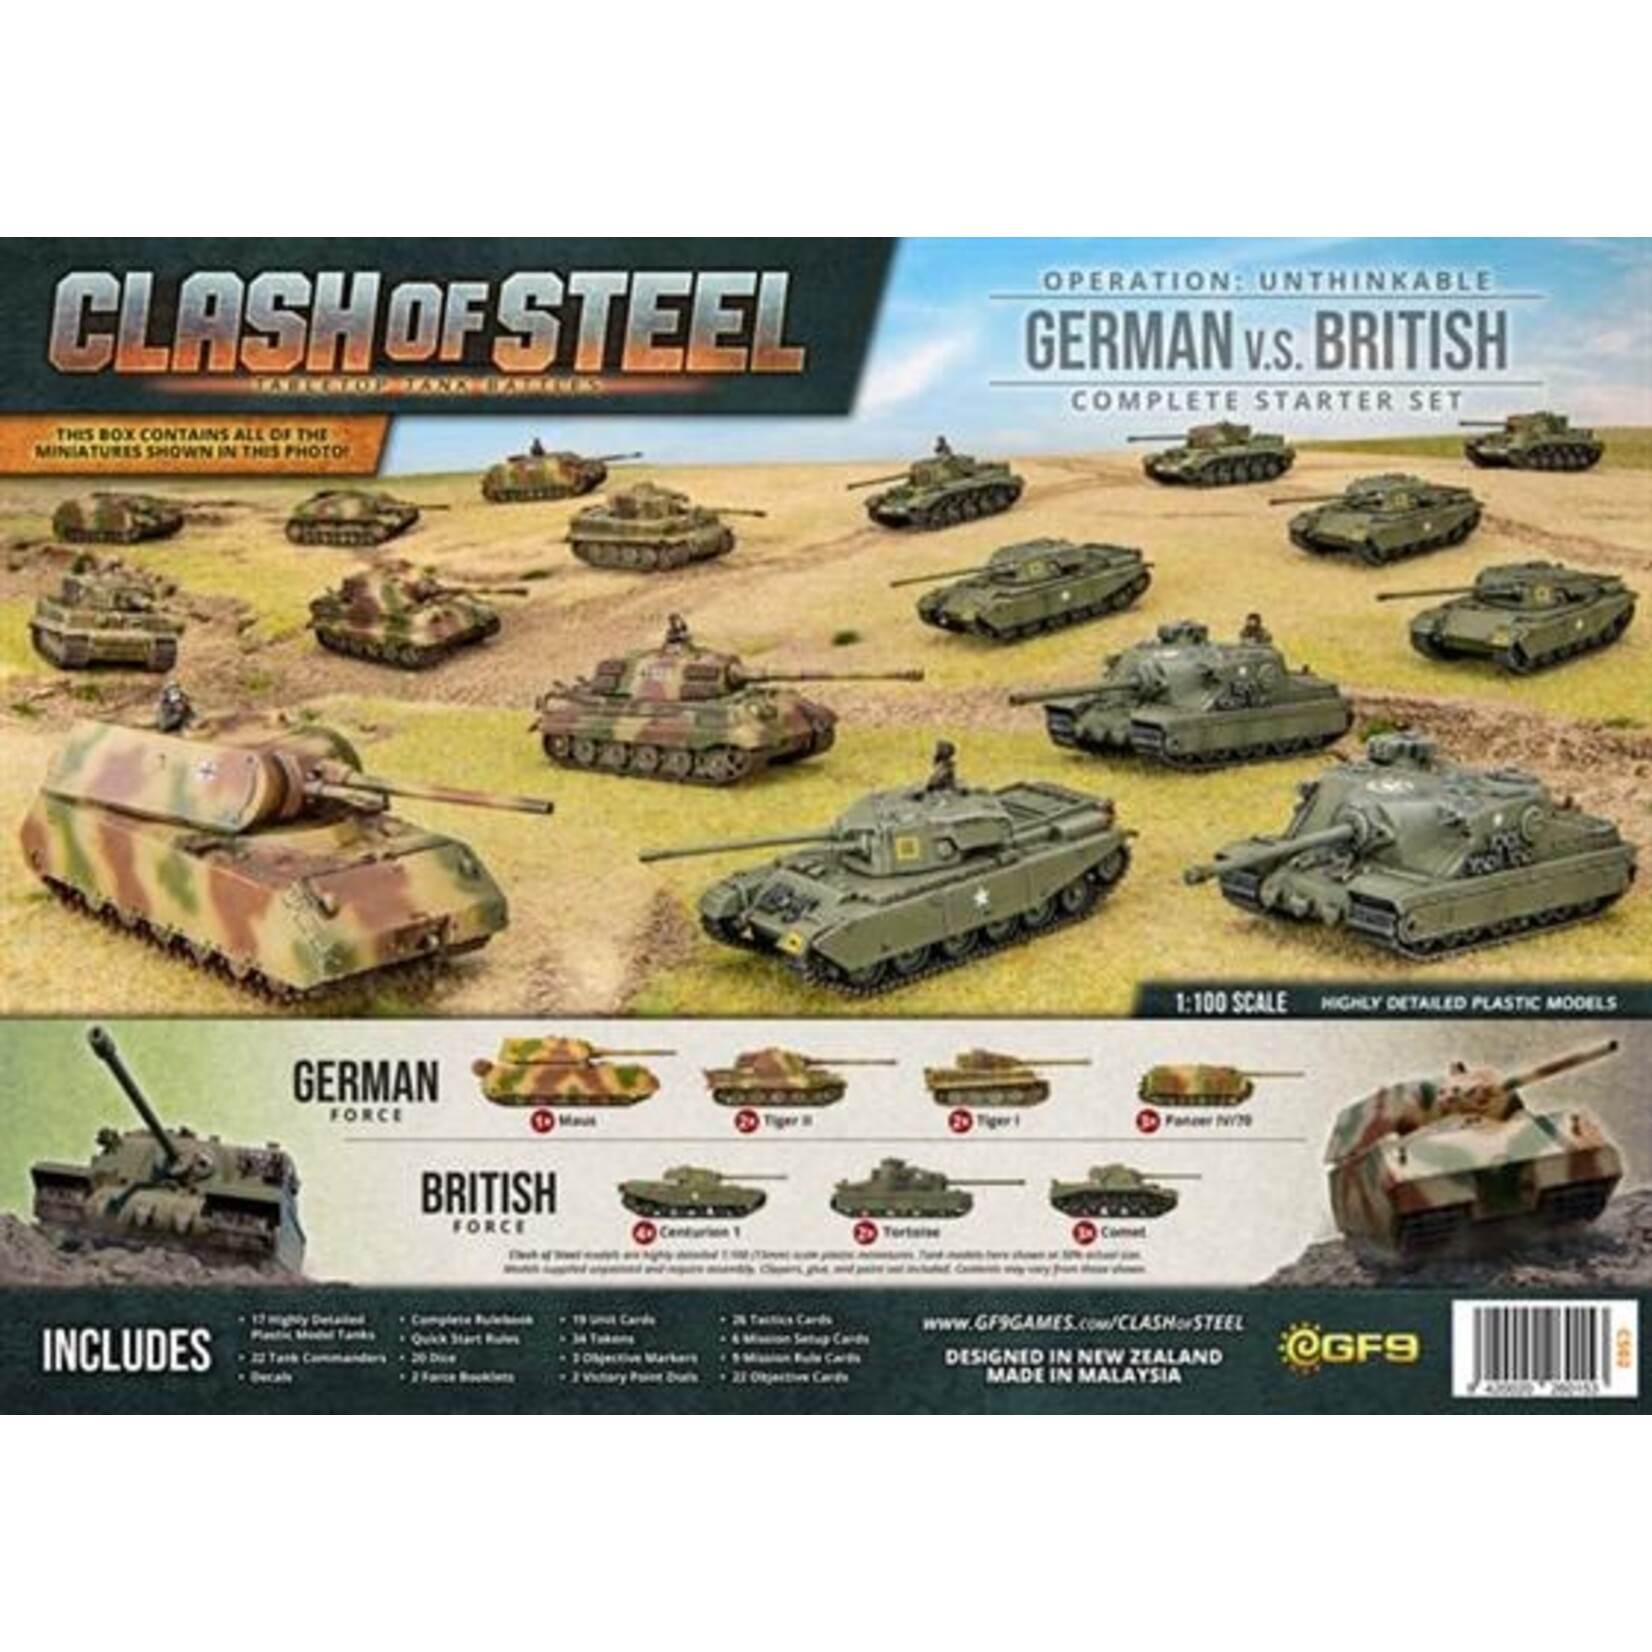 Clash Of Steel Starter Set - Operation: Unthinkable German VS British